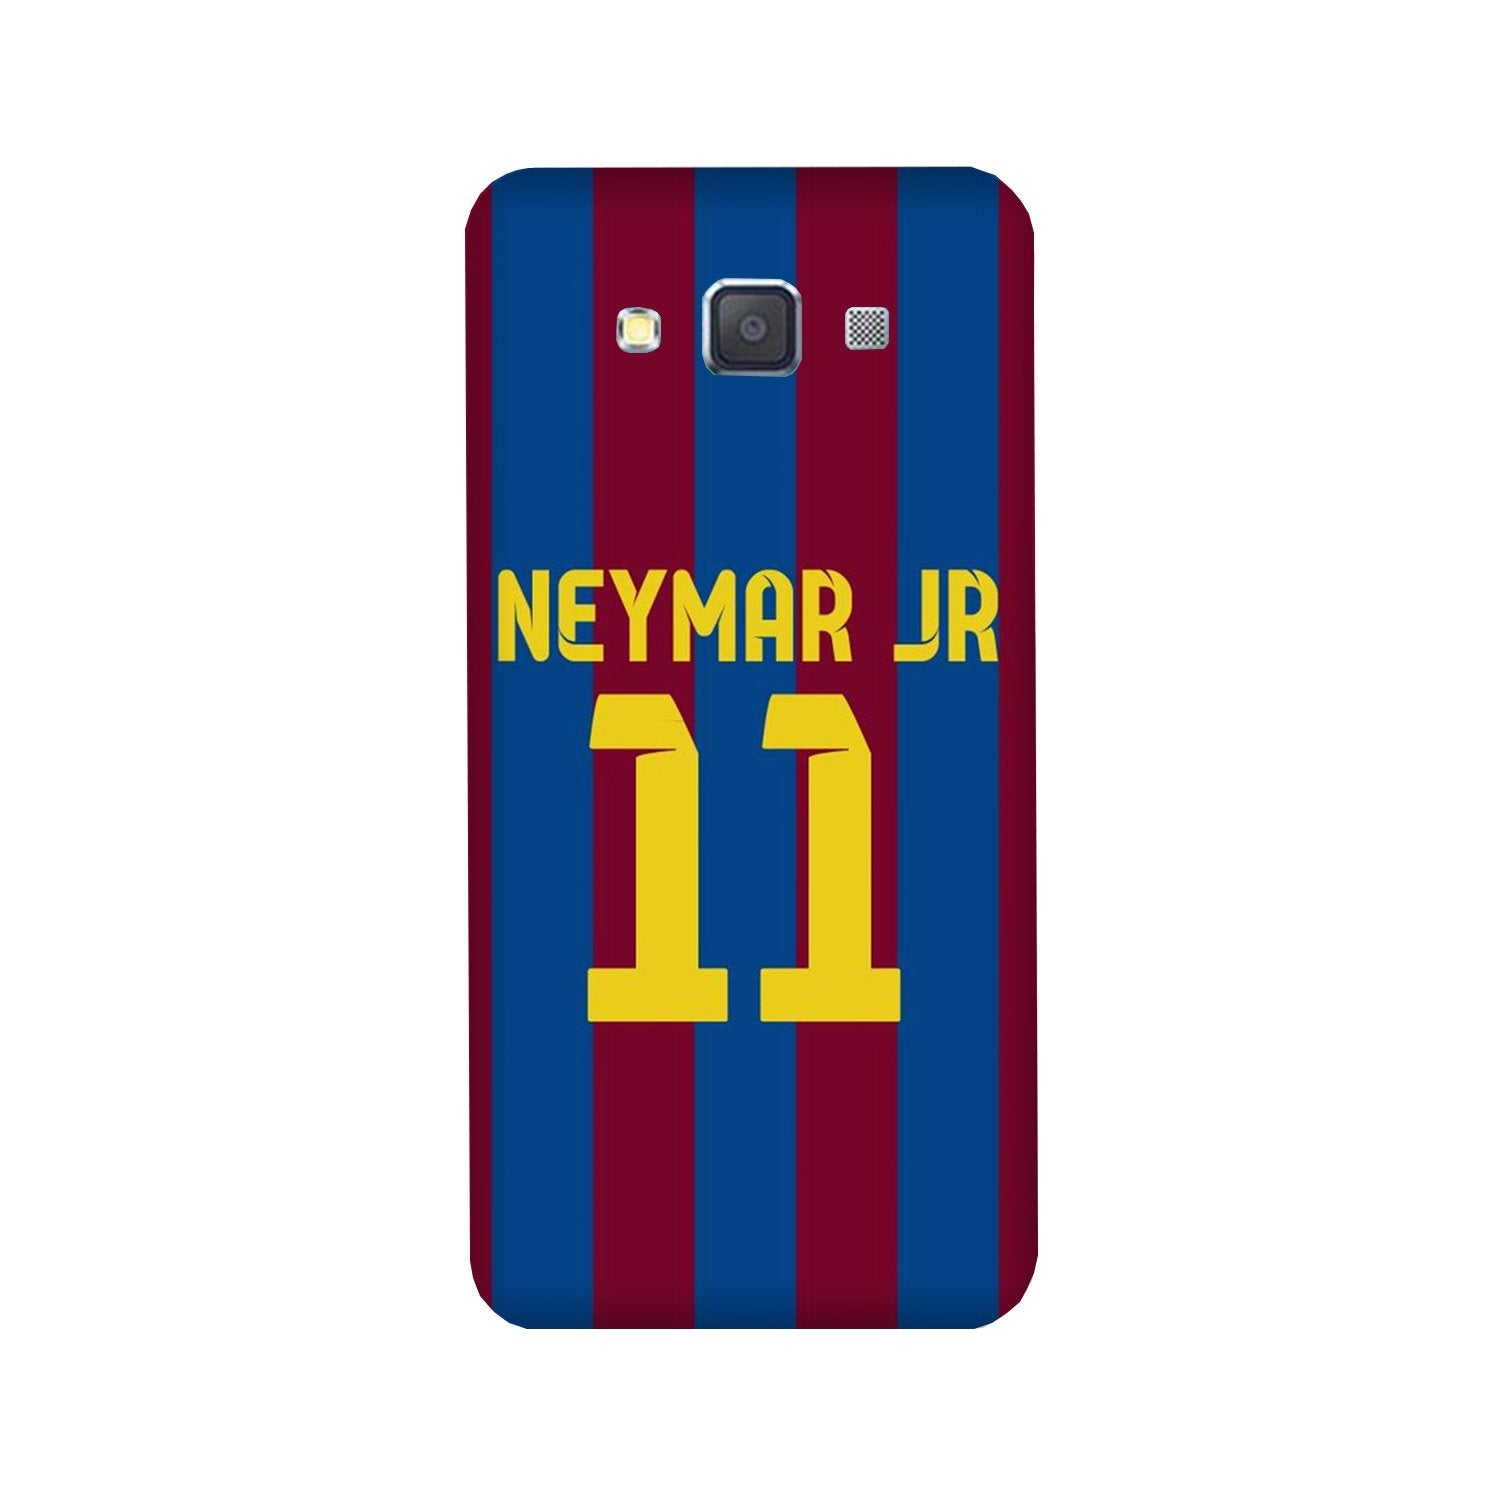 Neymar Jr Case for Galaxy ON7/ON7 Pro(Design - 162)